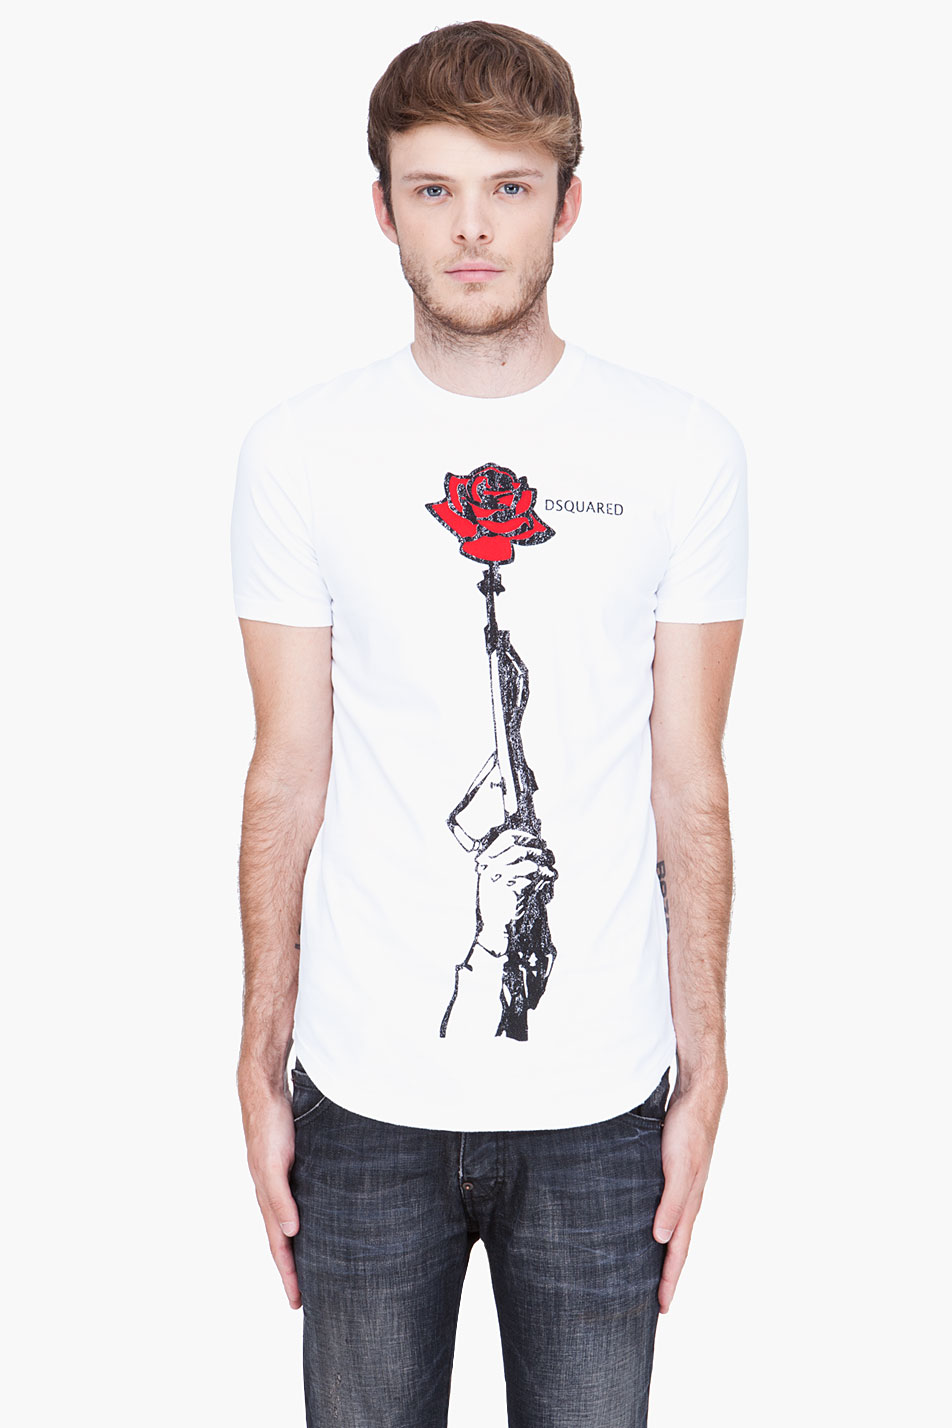 dsquared2 gun and rose t shirt